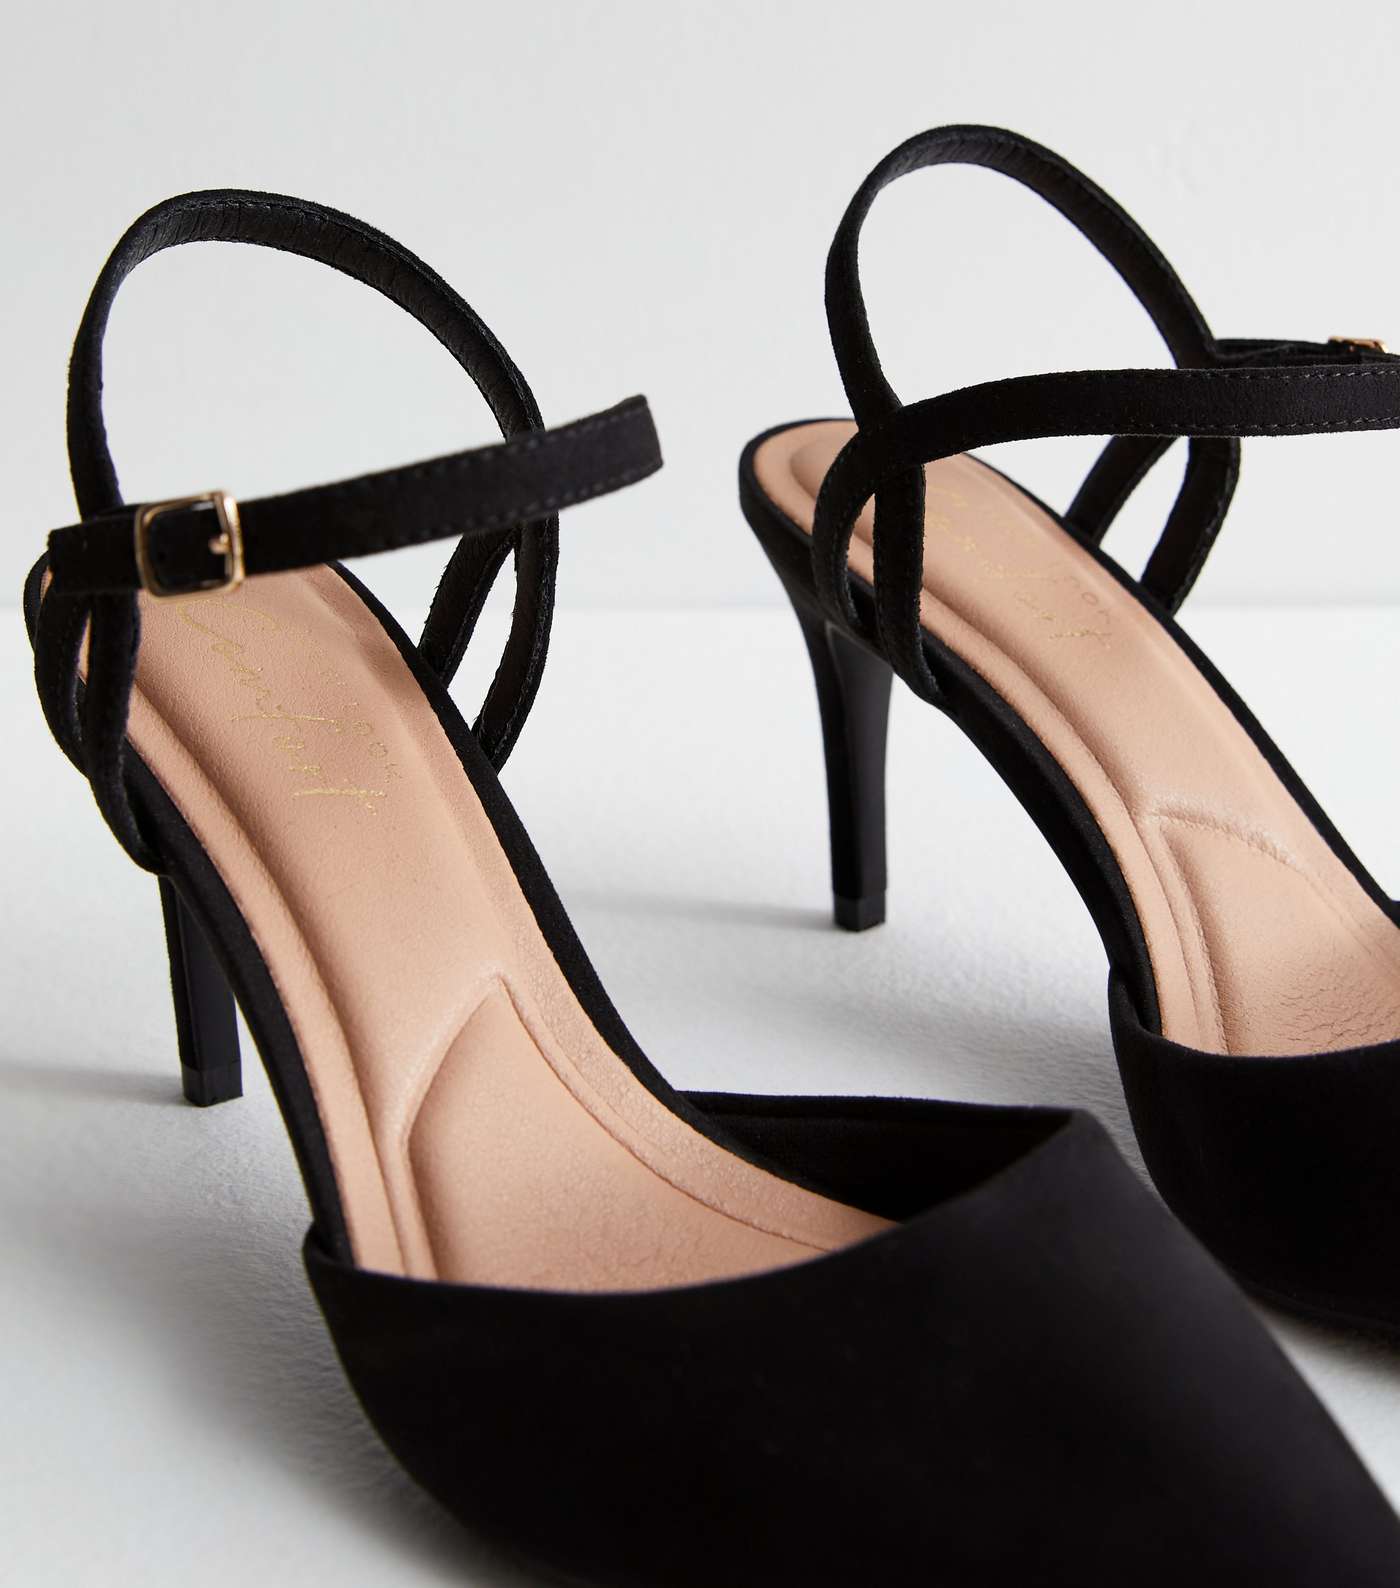 Black Suedette Pointed Stiletto Heel Court Shoes Image 5